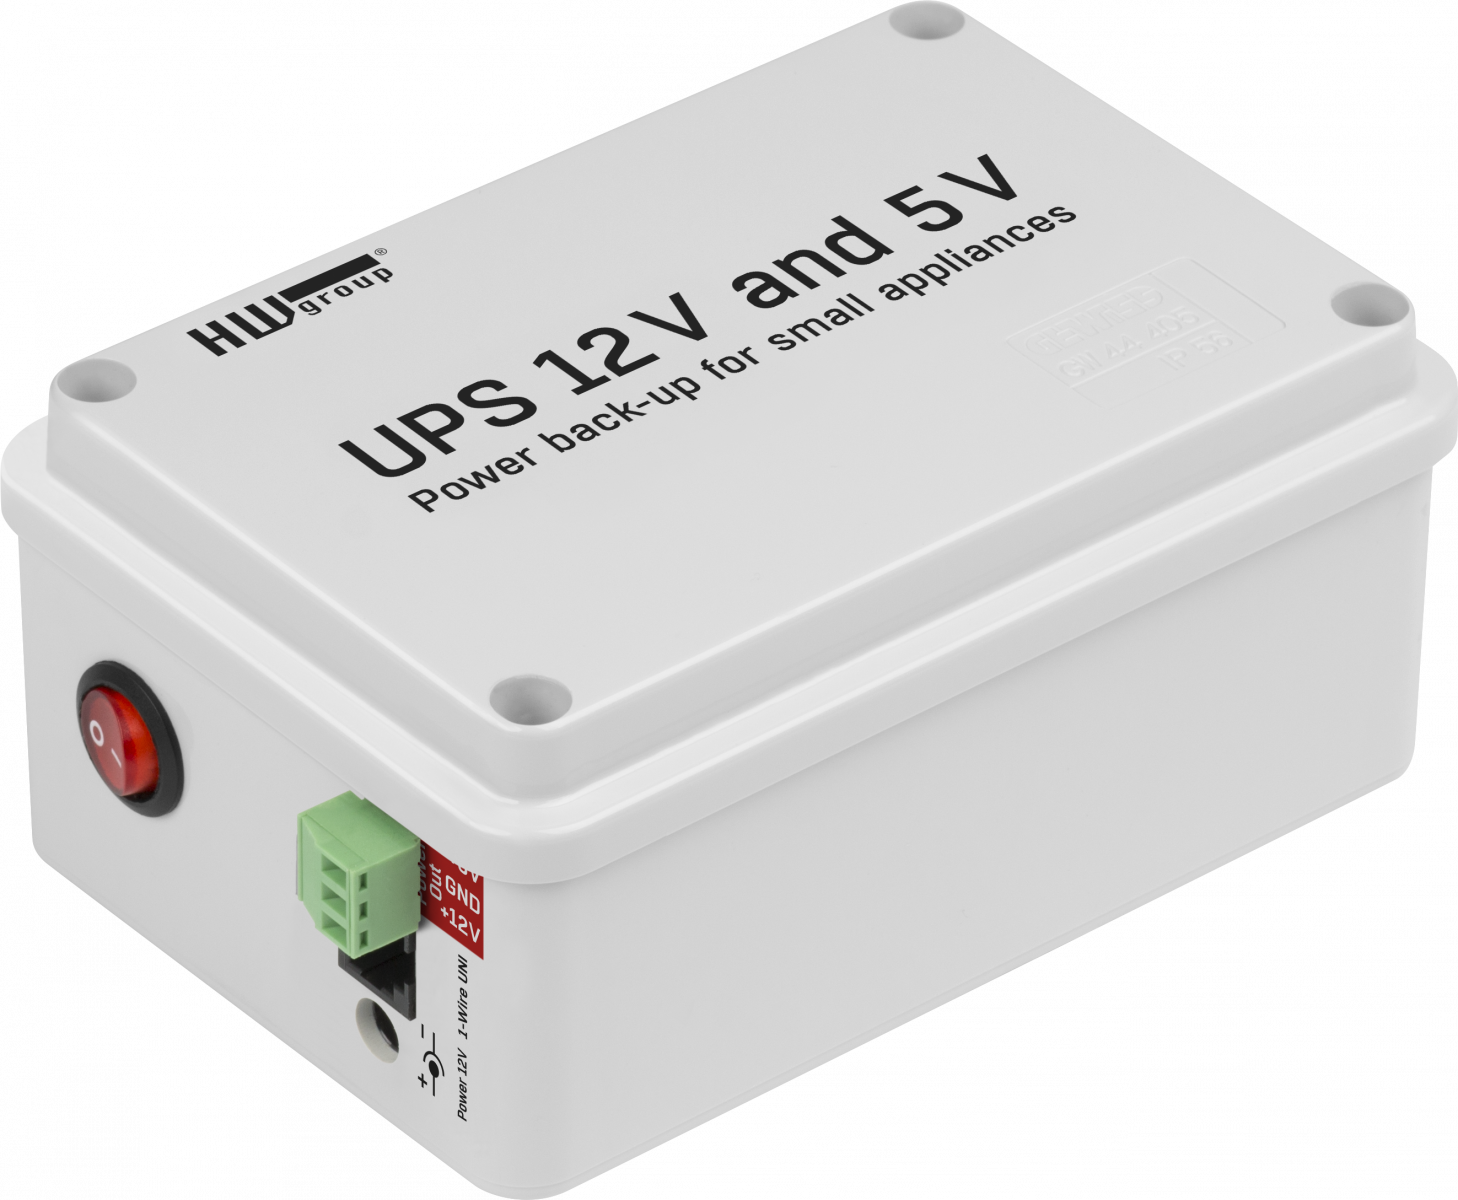 UPS FX 5-12 Mini UPS Uninterruptible Power Supply, 220VOLT (NOT FOR USA)